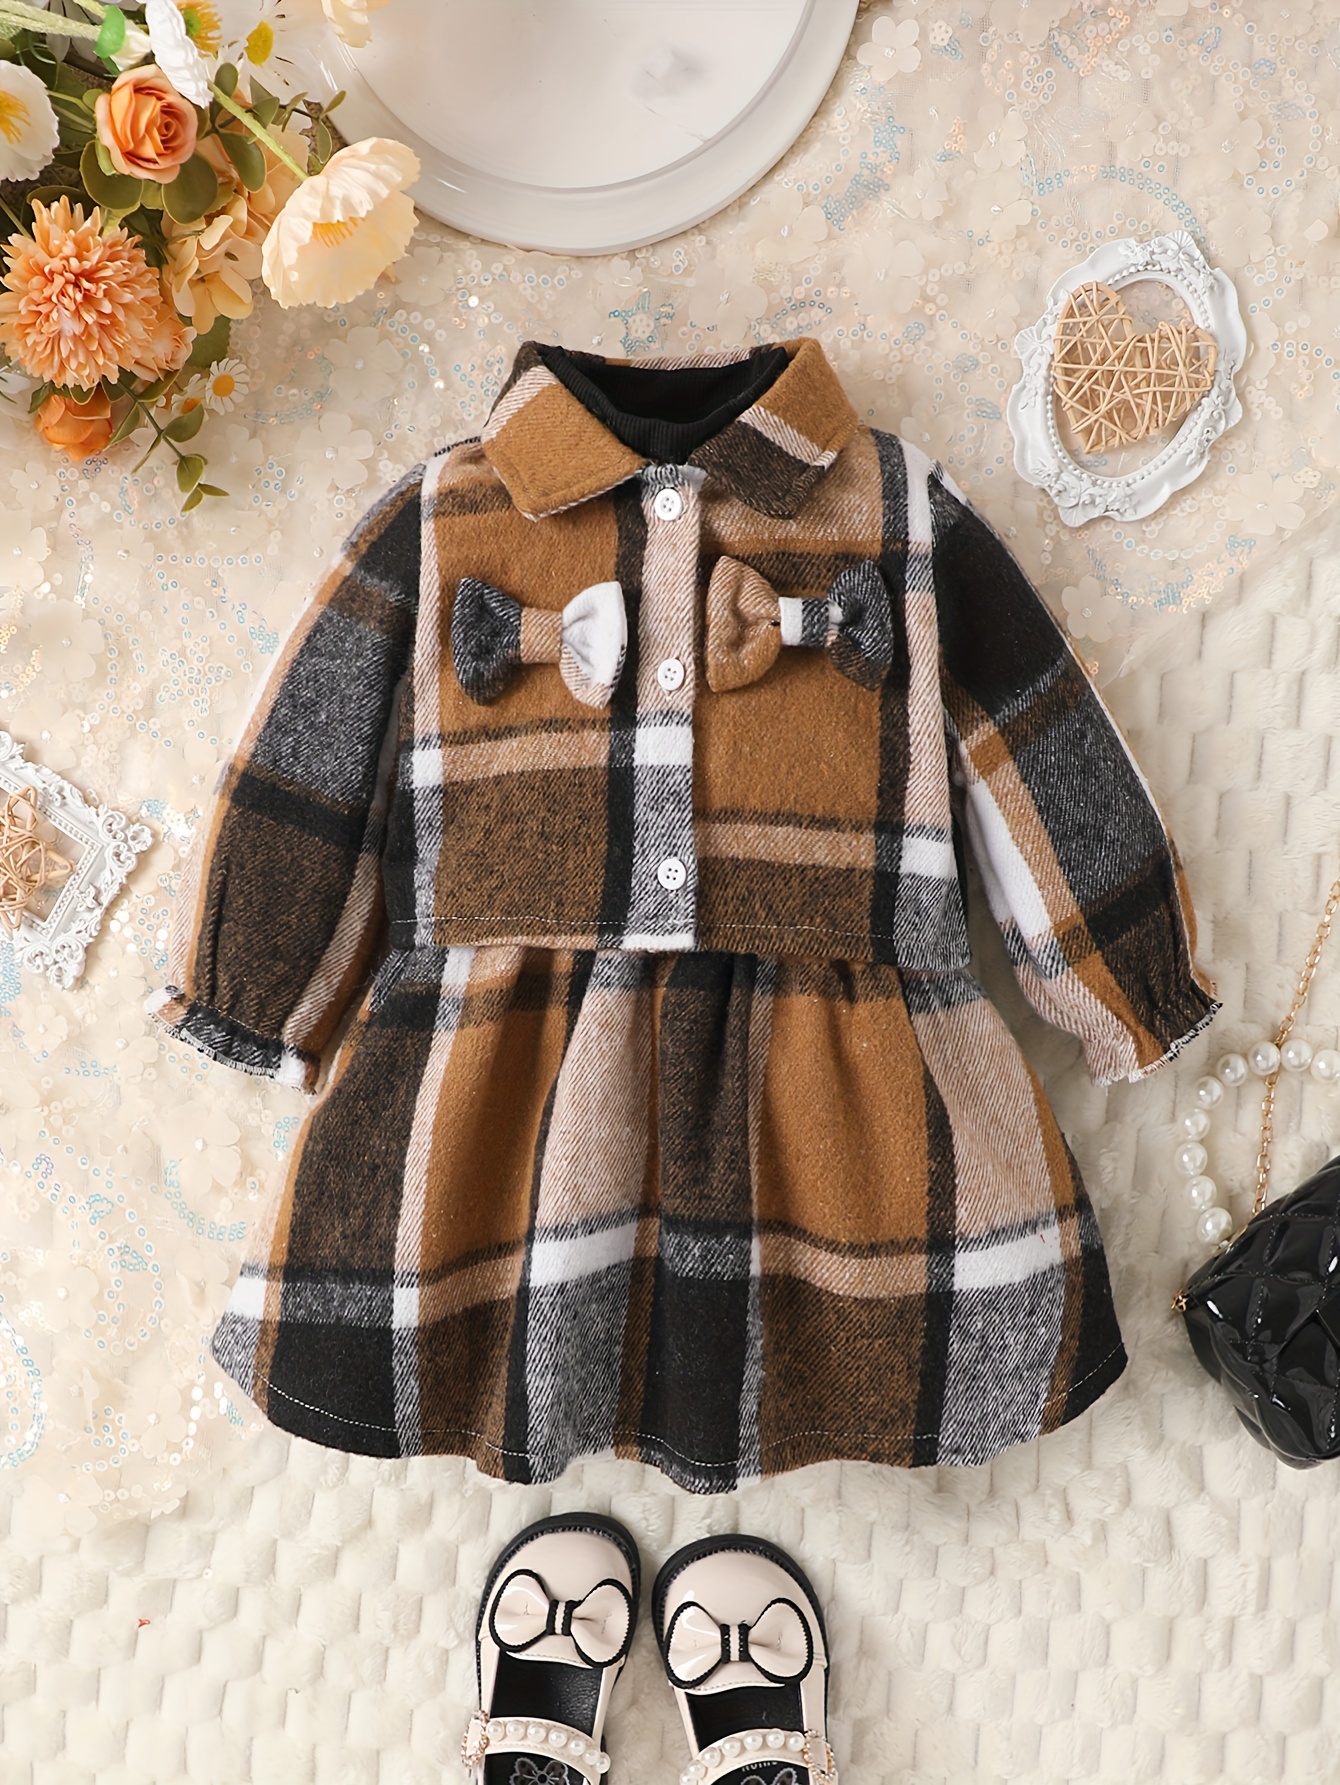 Toddler Baby Girls Winter Clothes Plaid Coat Tops+Tutu Dress